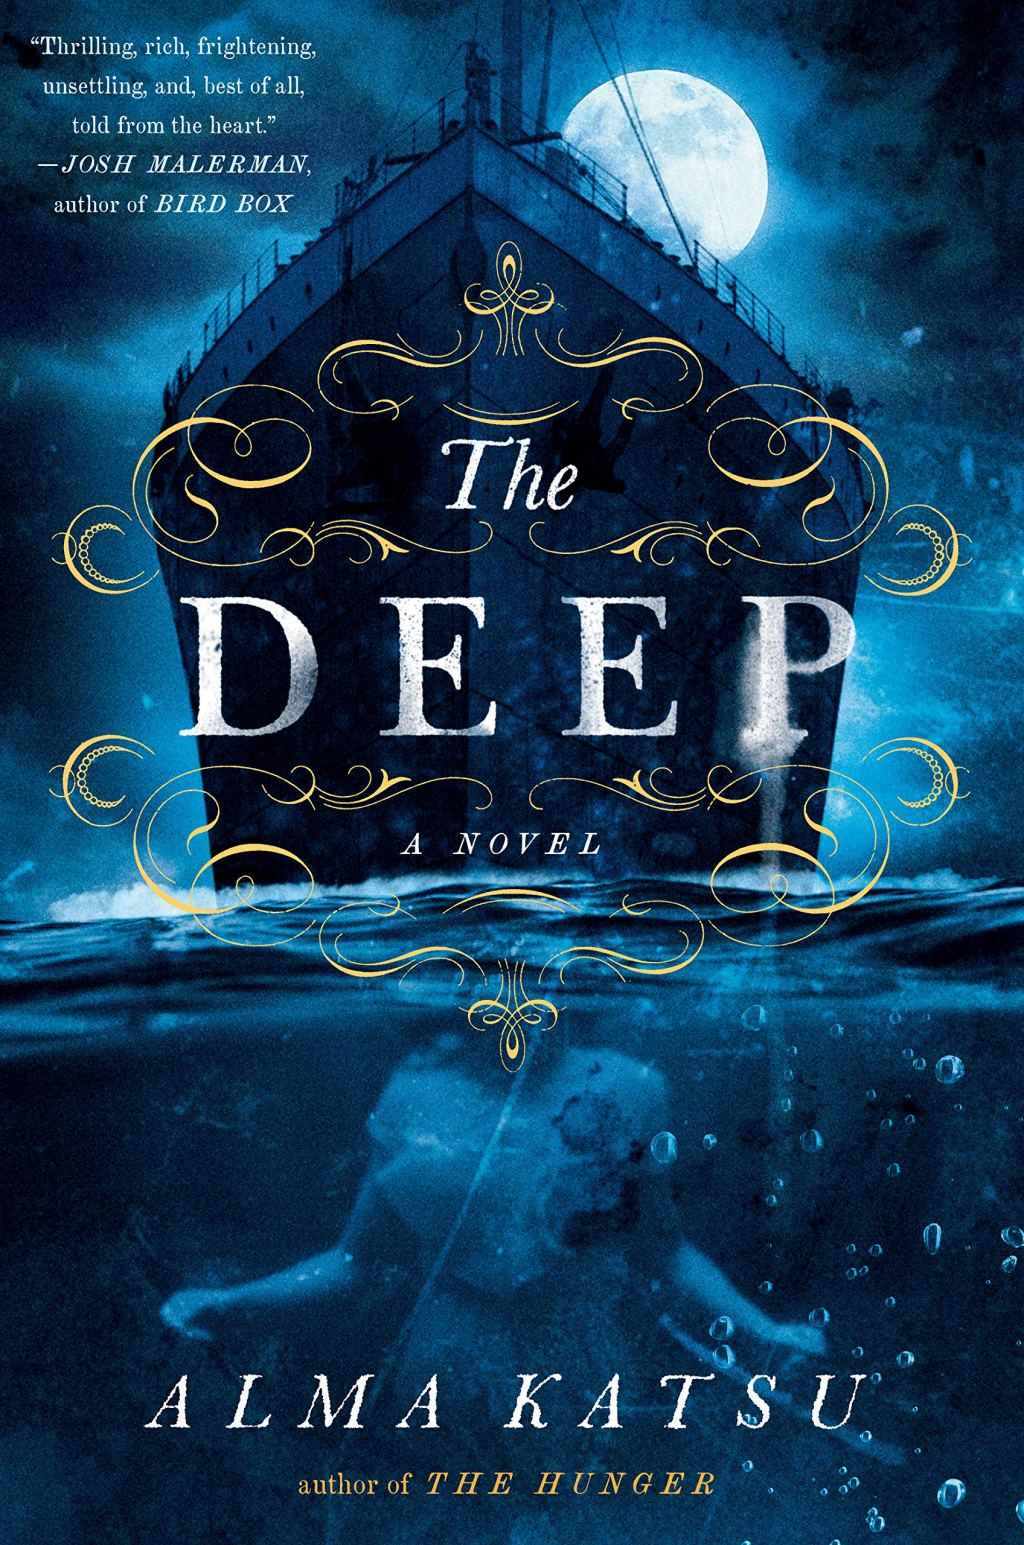 On reading: The Deep by Alma Katsu